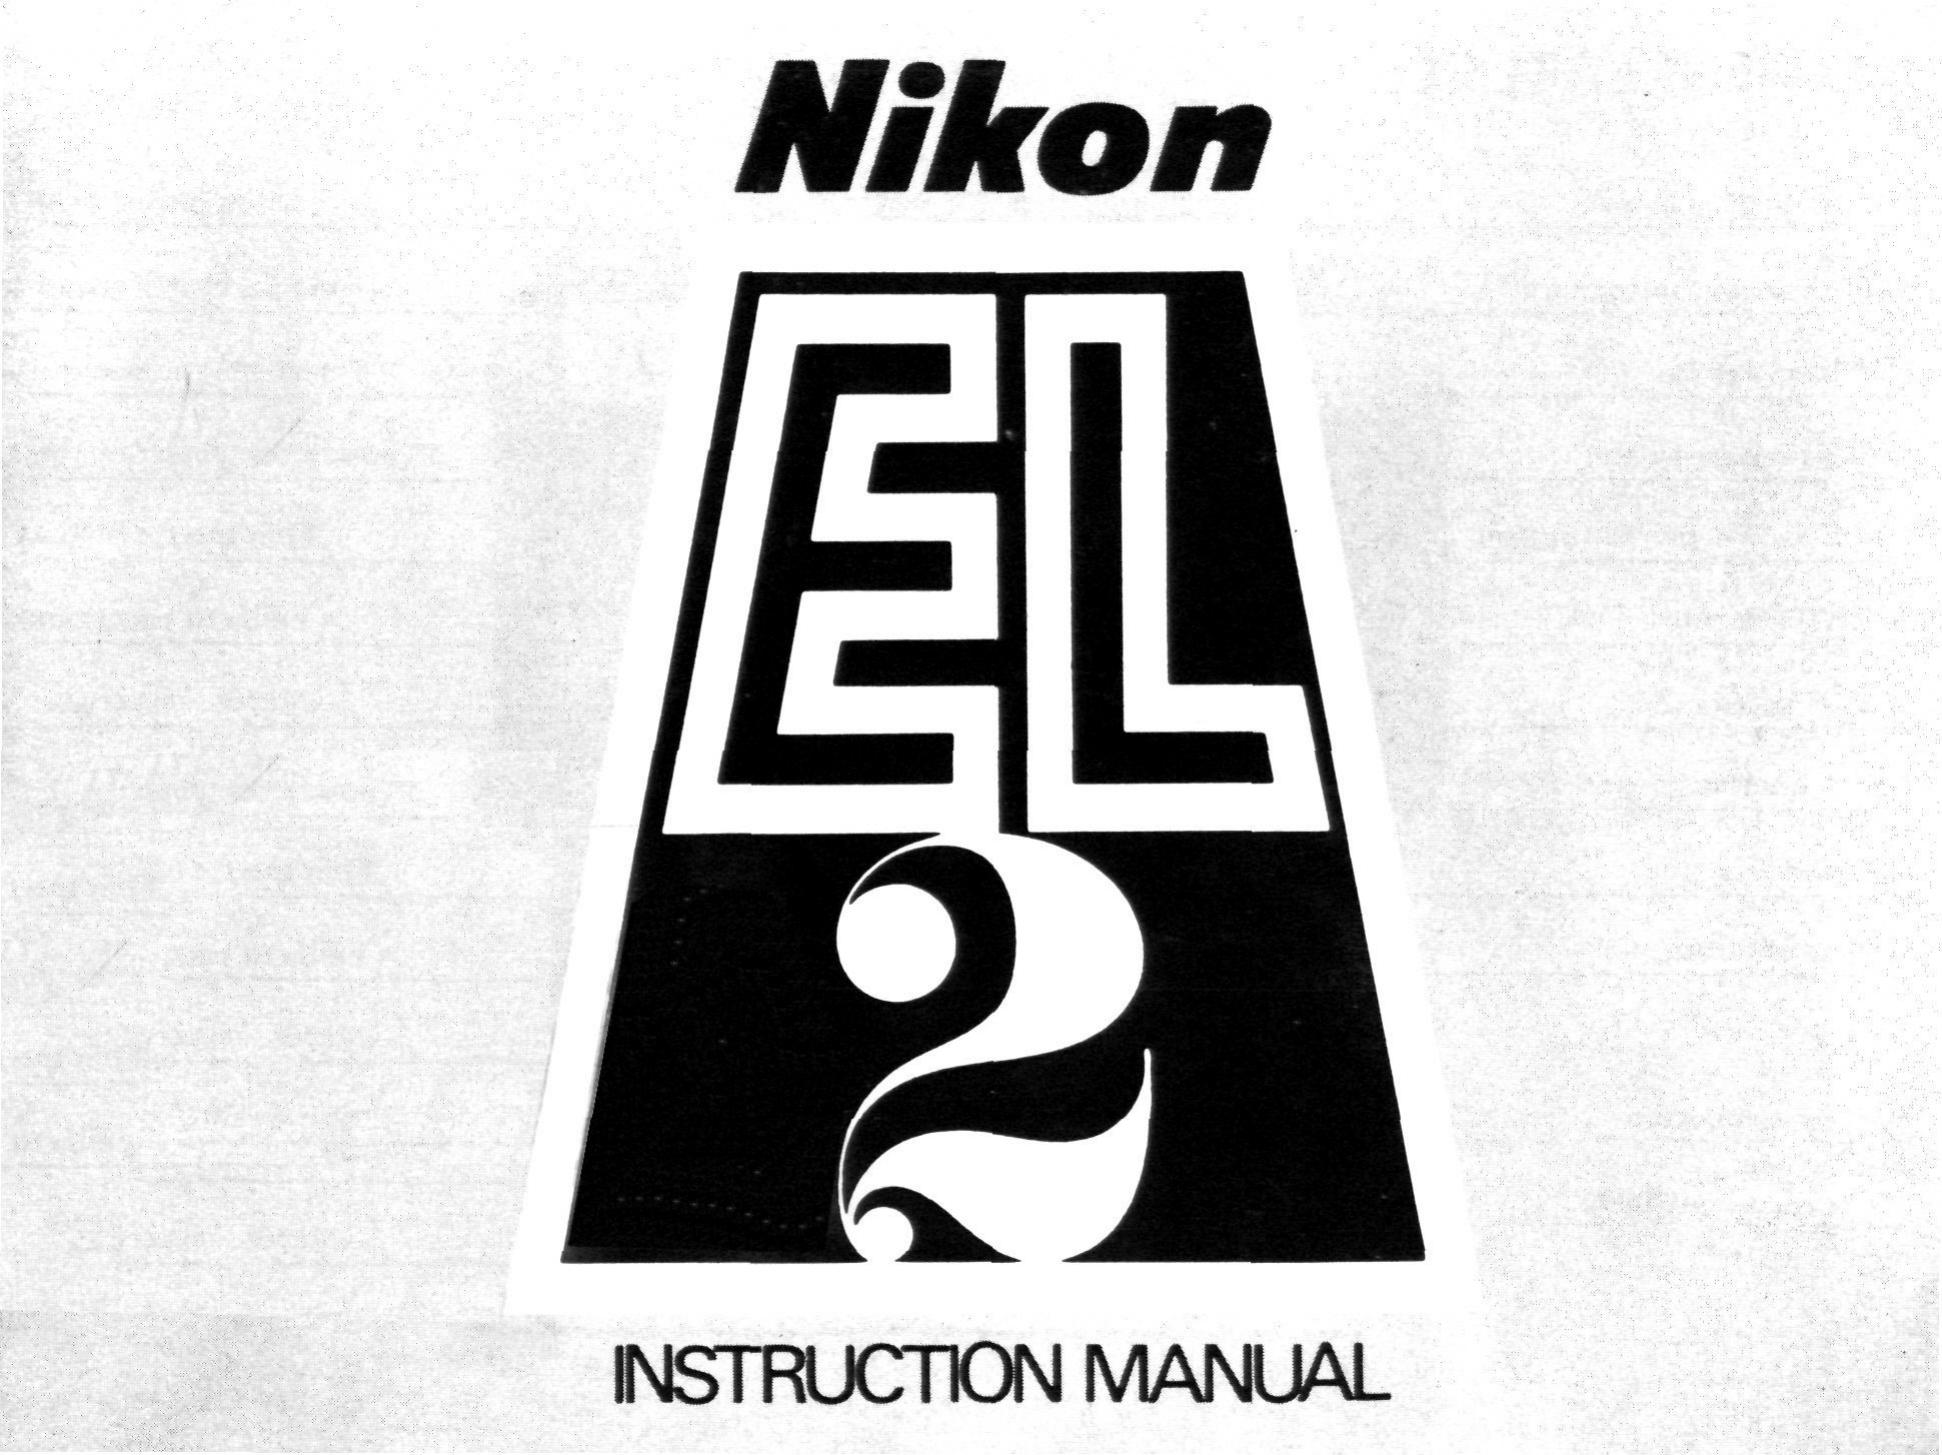 Nikon EL2 Film Camera User Manual